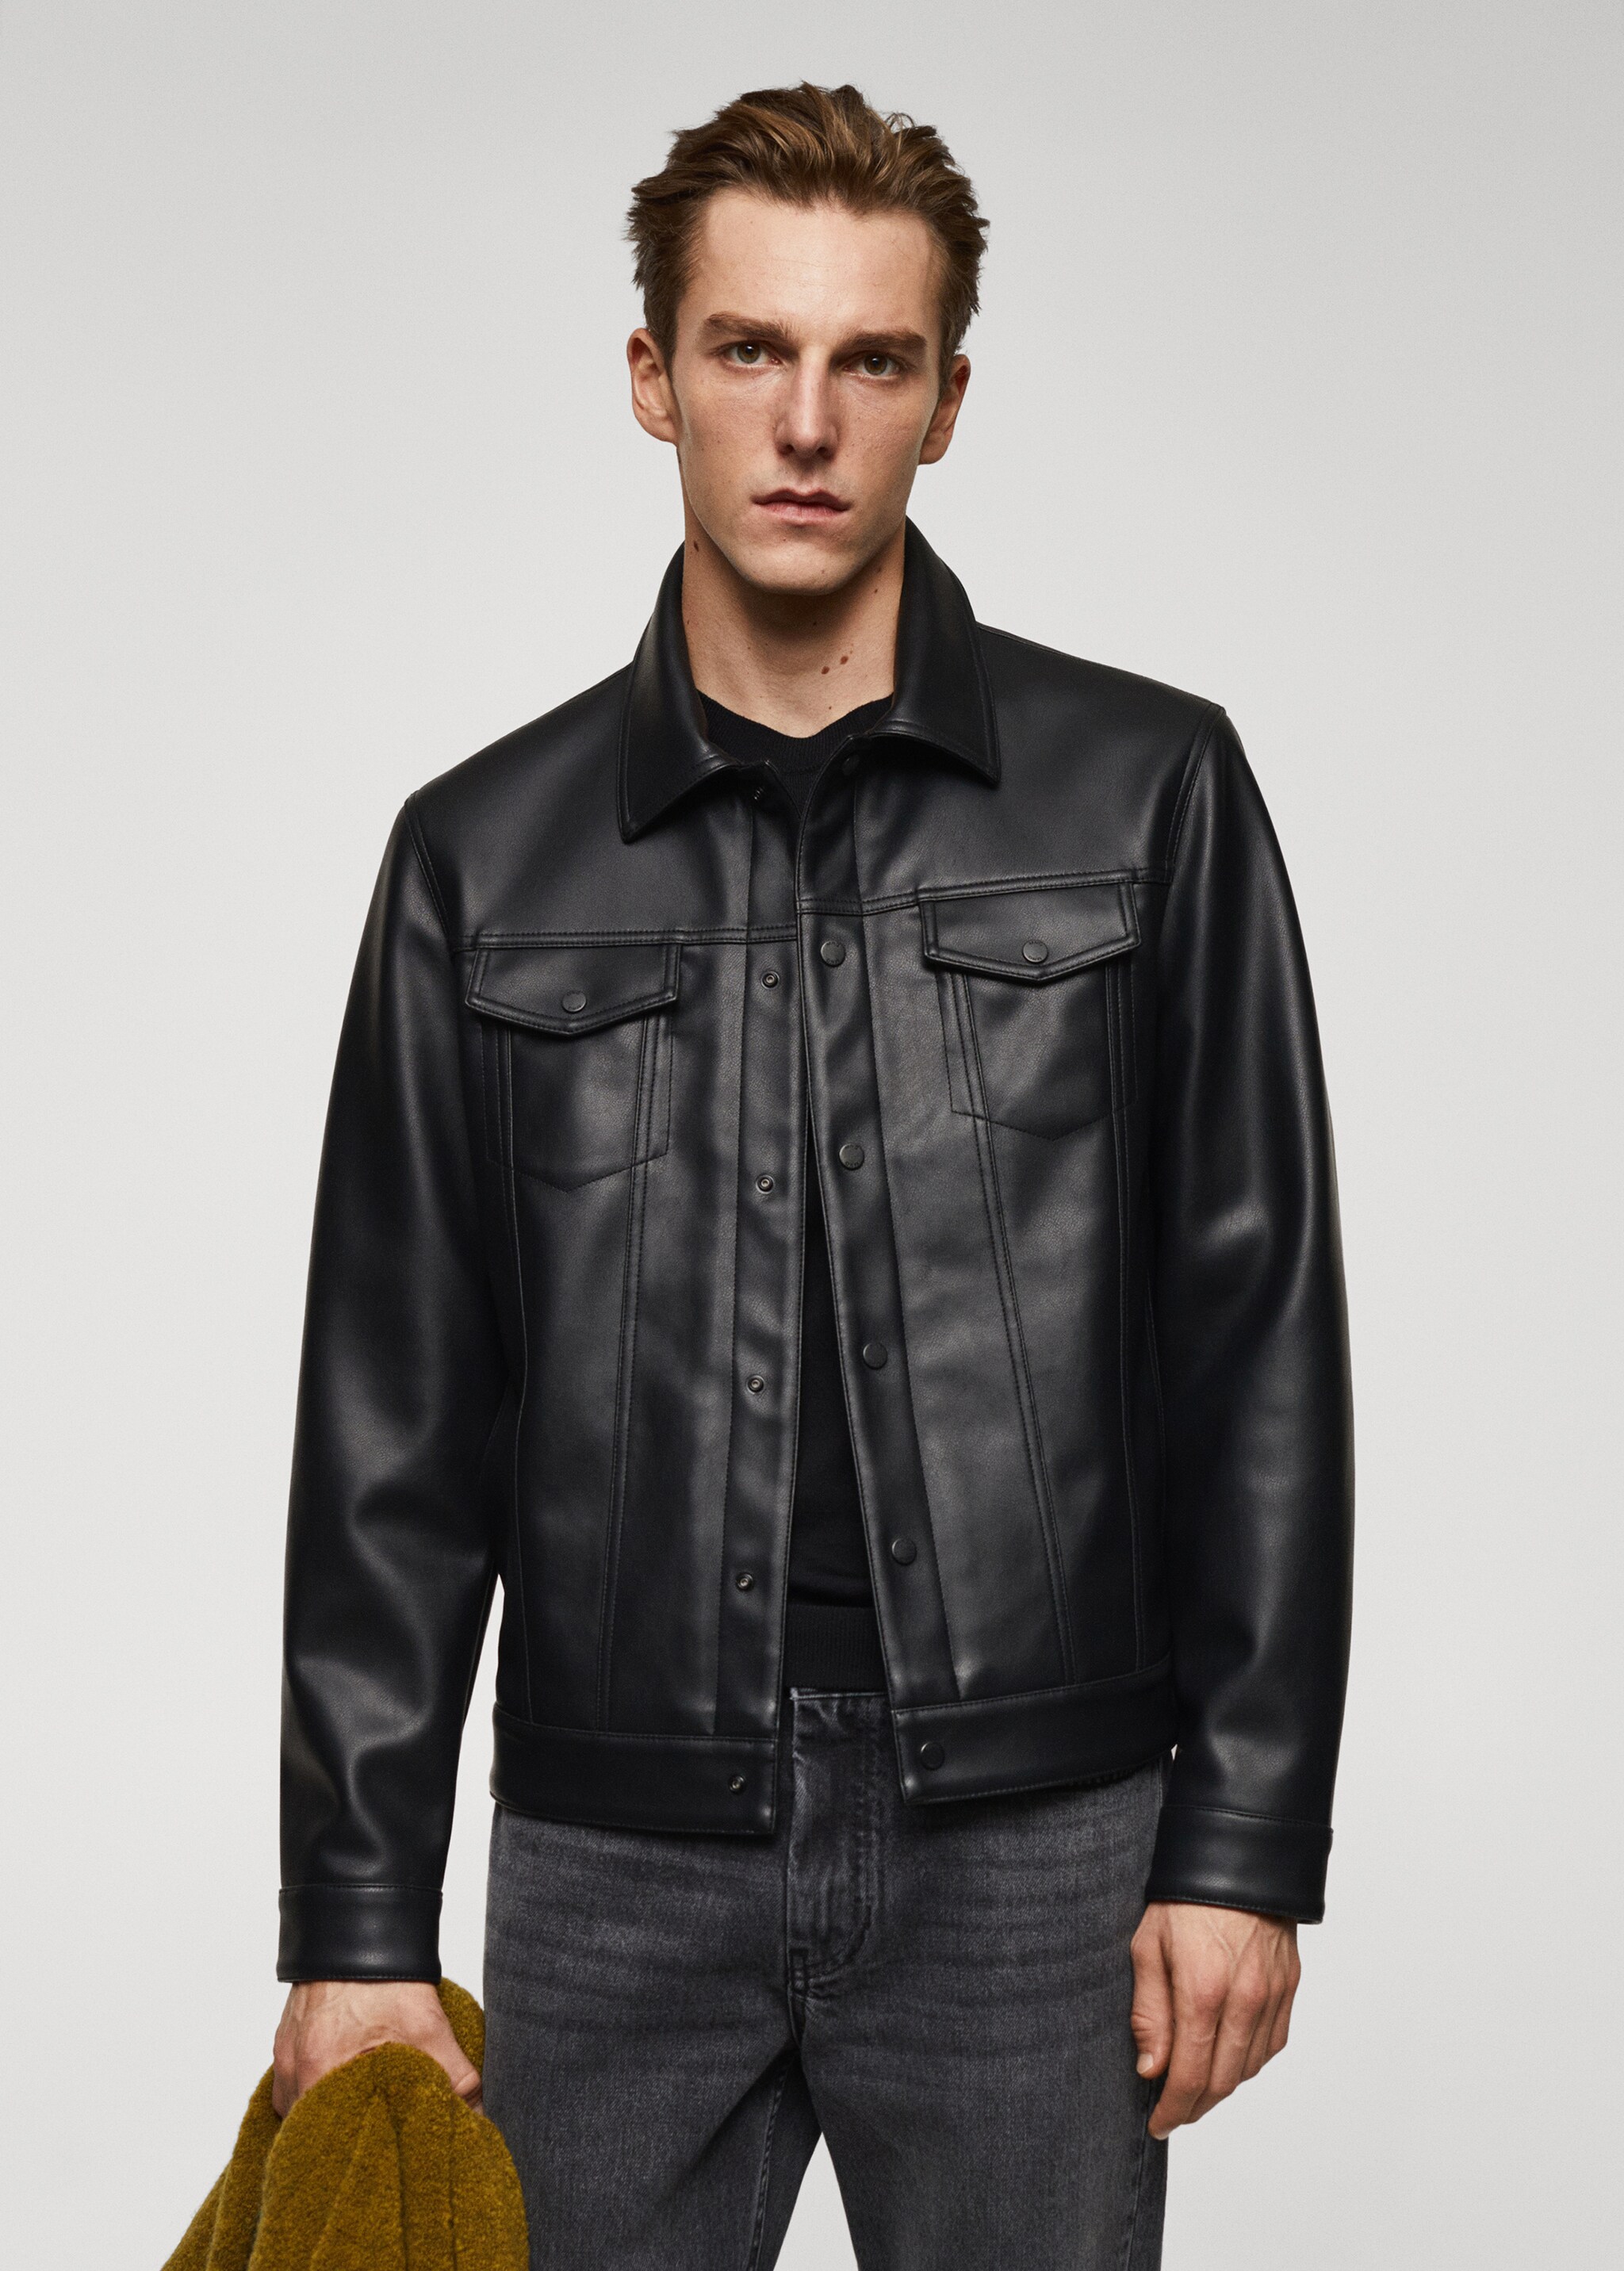 Faux leather jacket with pockets - Medium plane